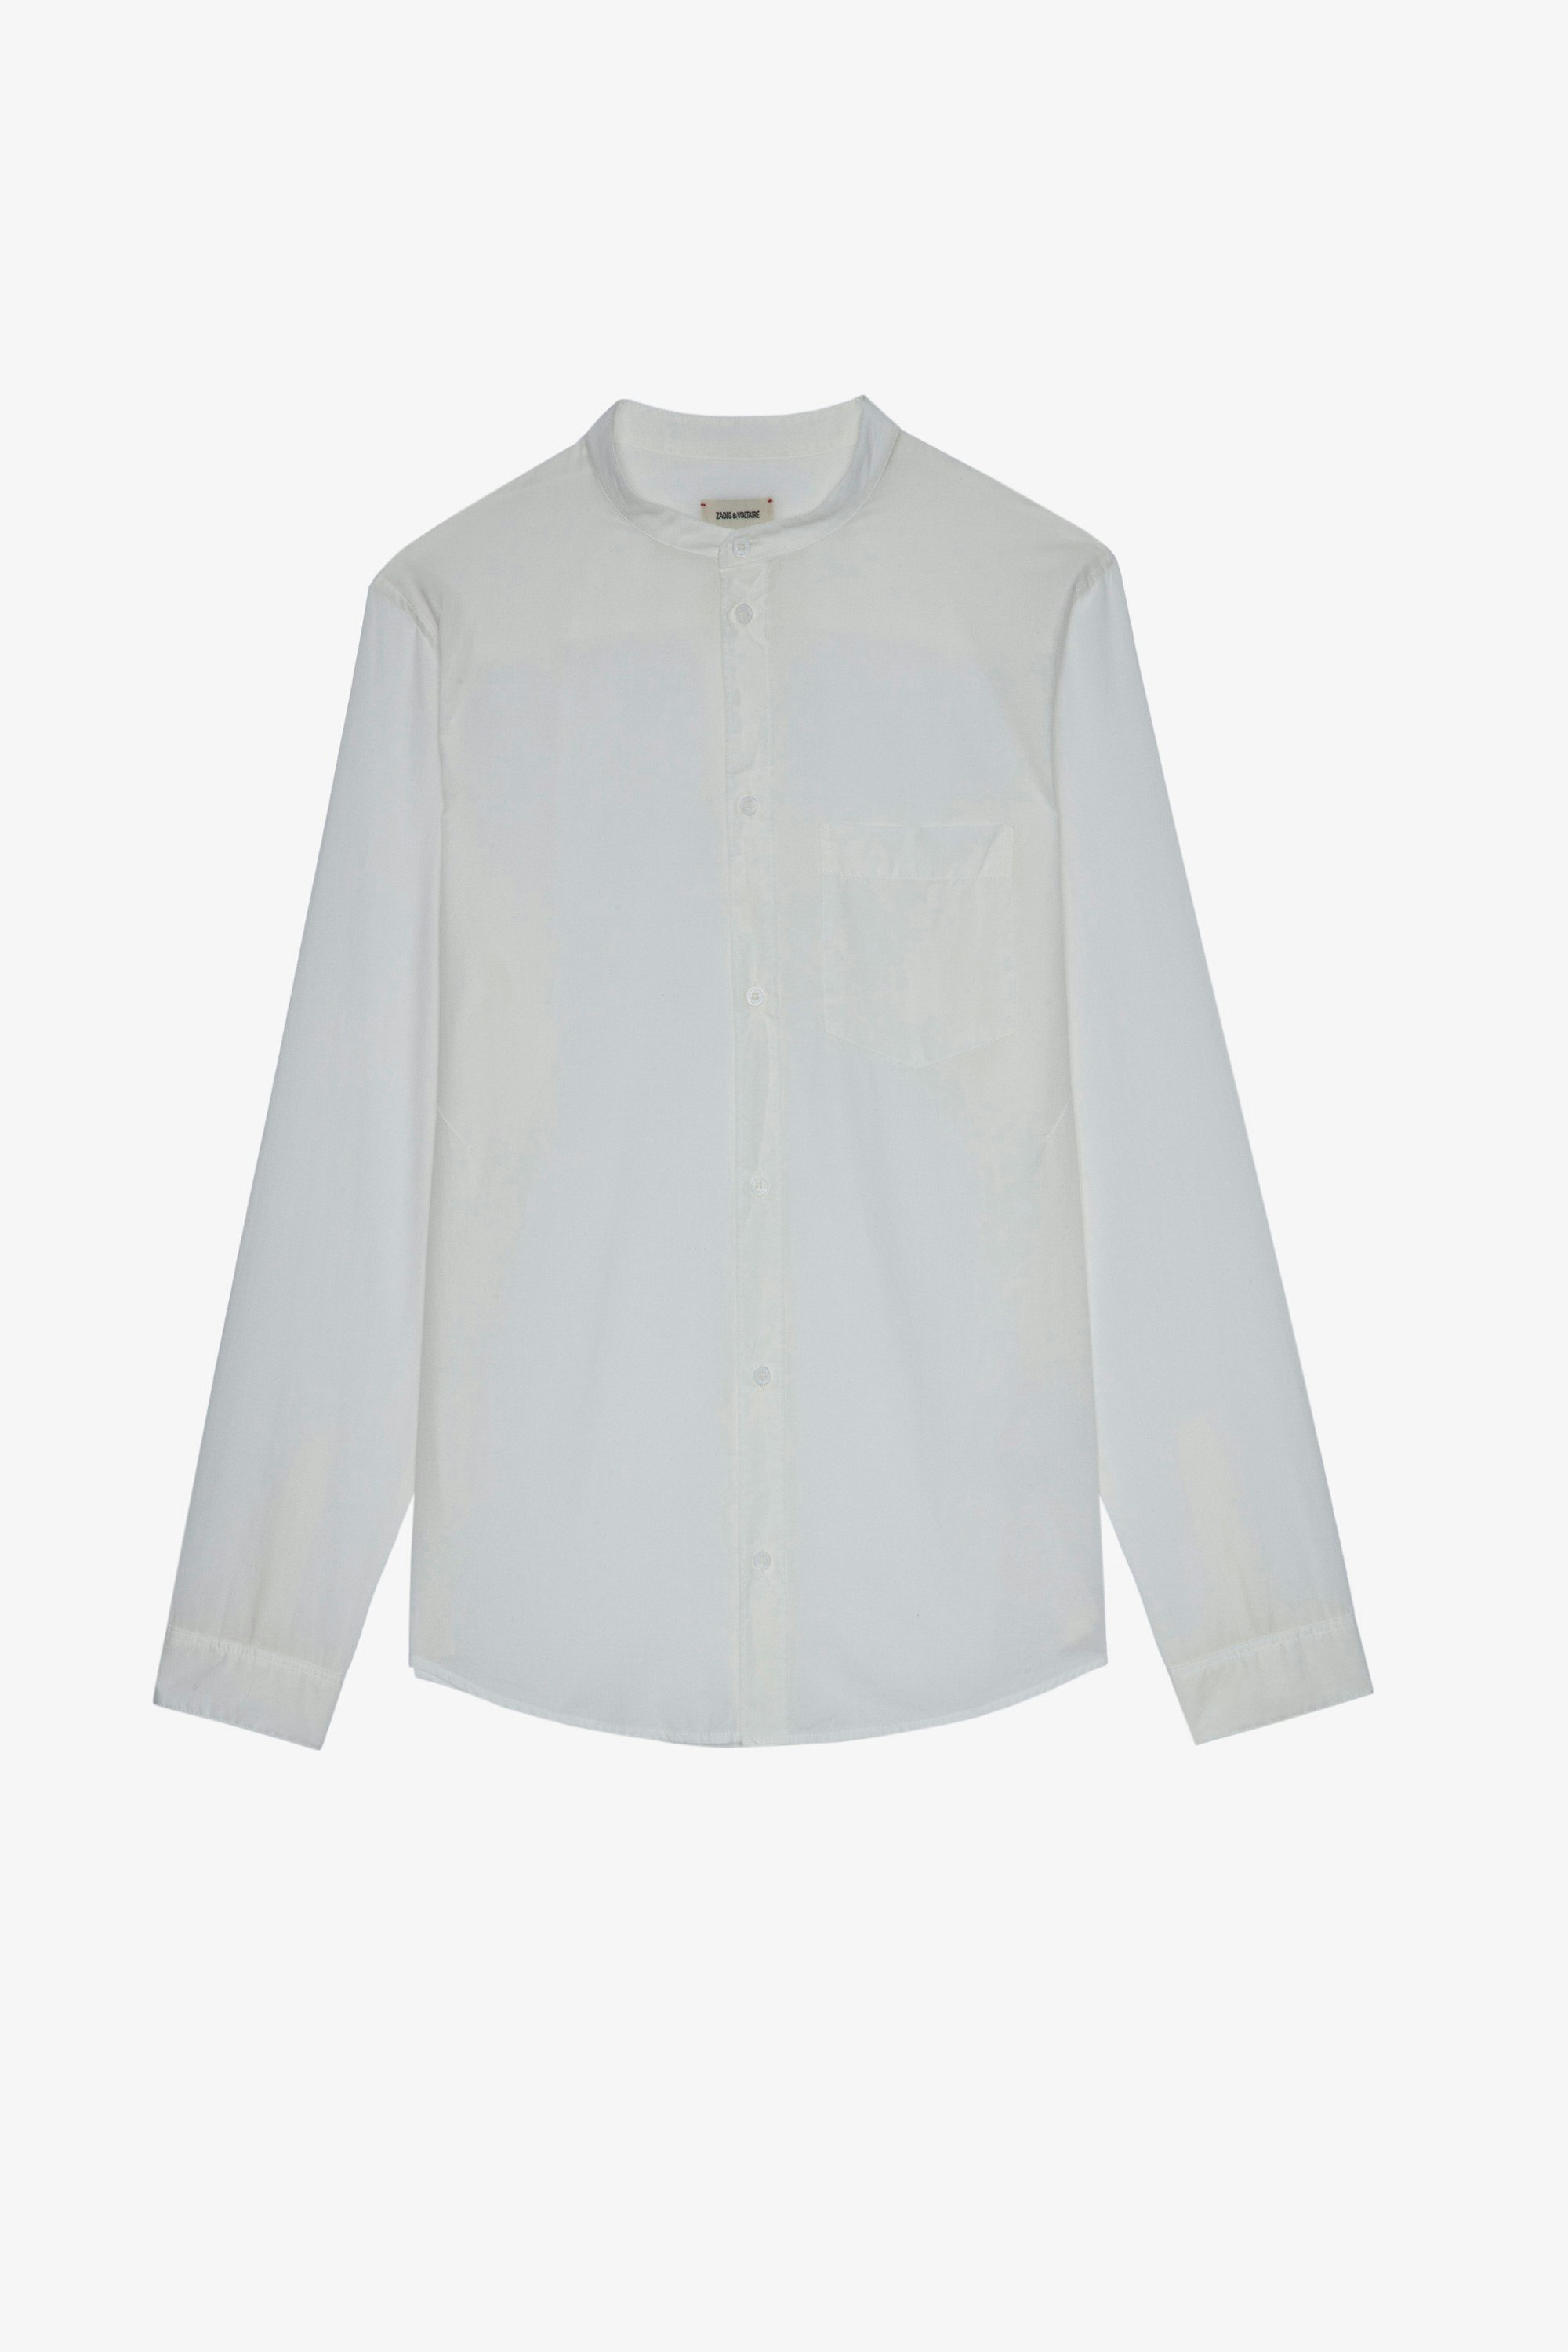 Thibaut Shirt Men’s white cotton shirt